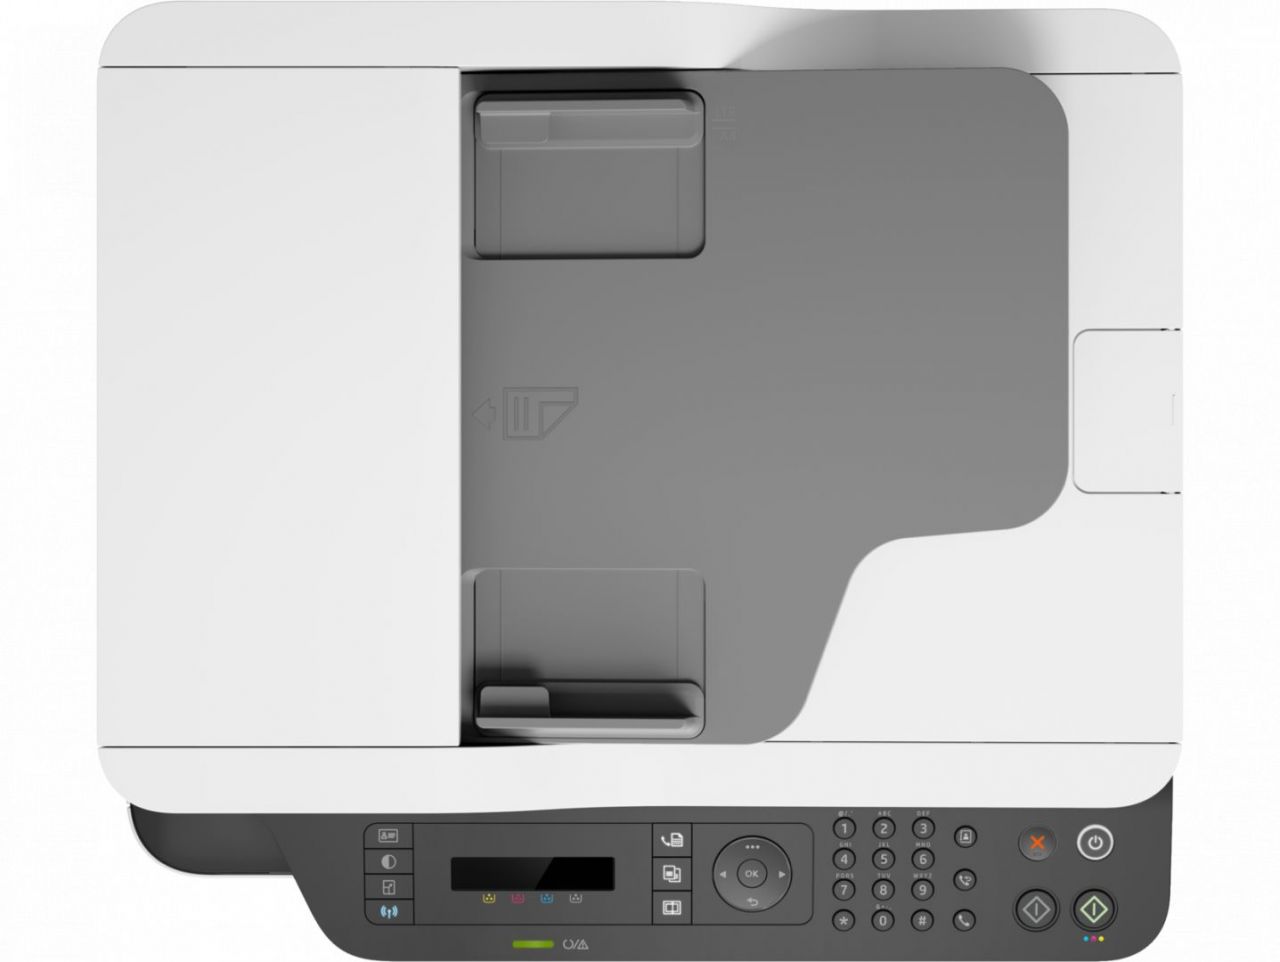 HP Color Laser 179fnw Lézernyomtató/Másoló/Scanner/Fax